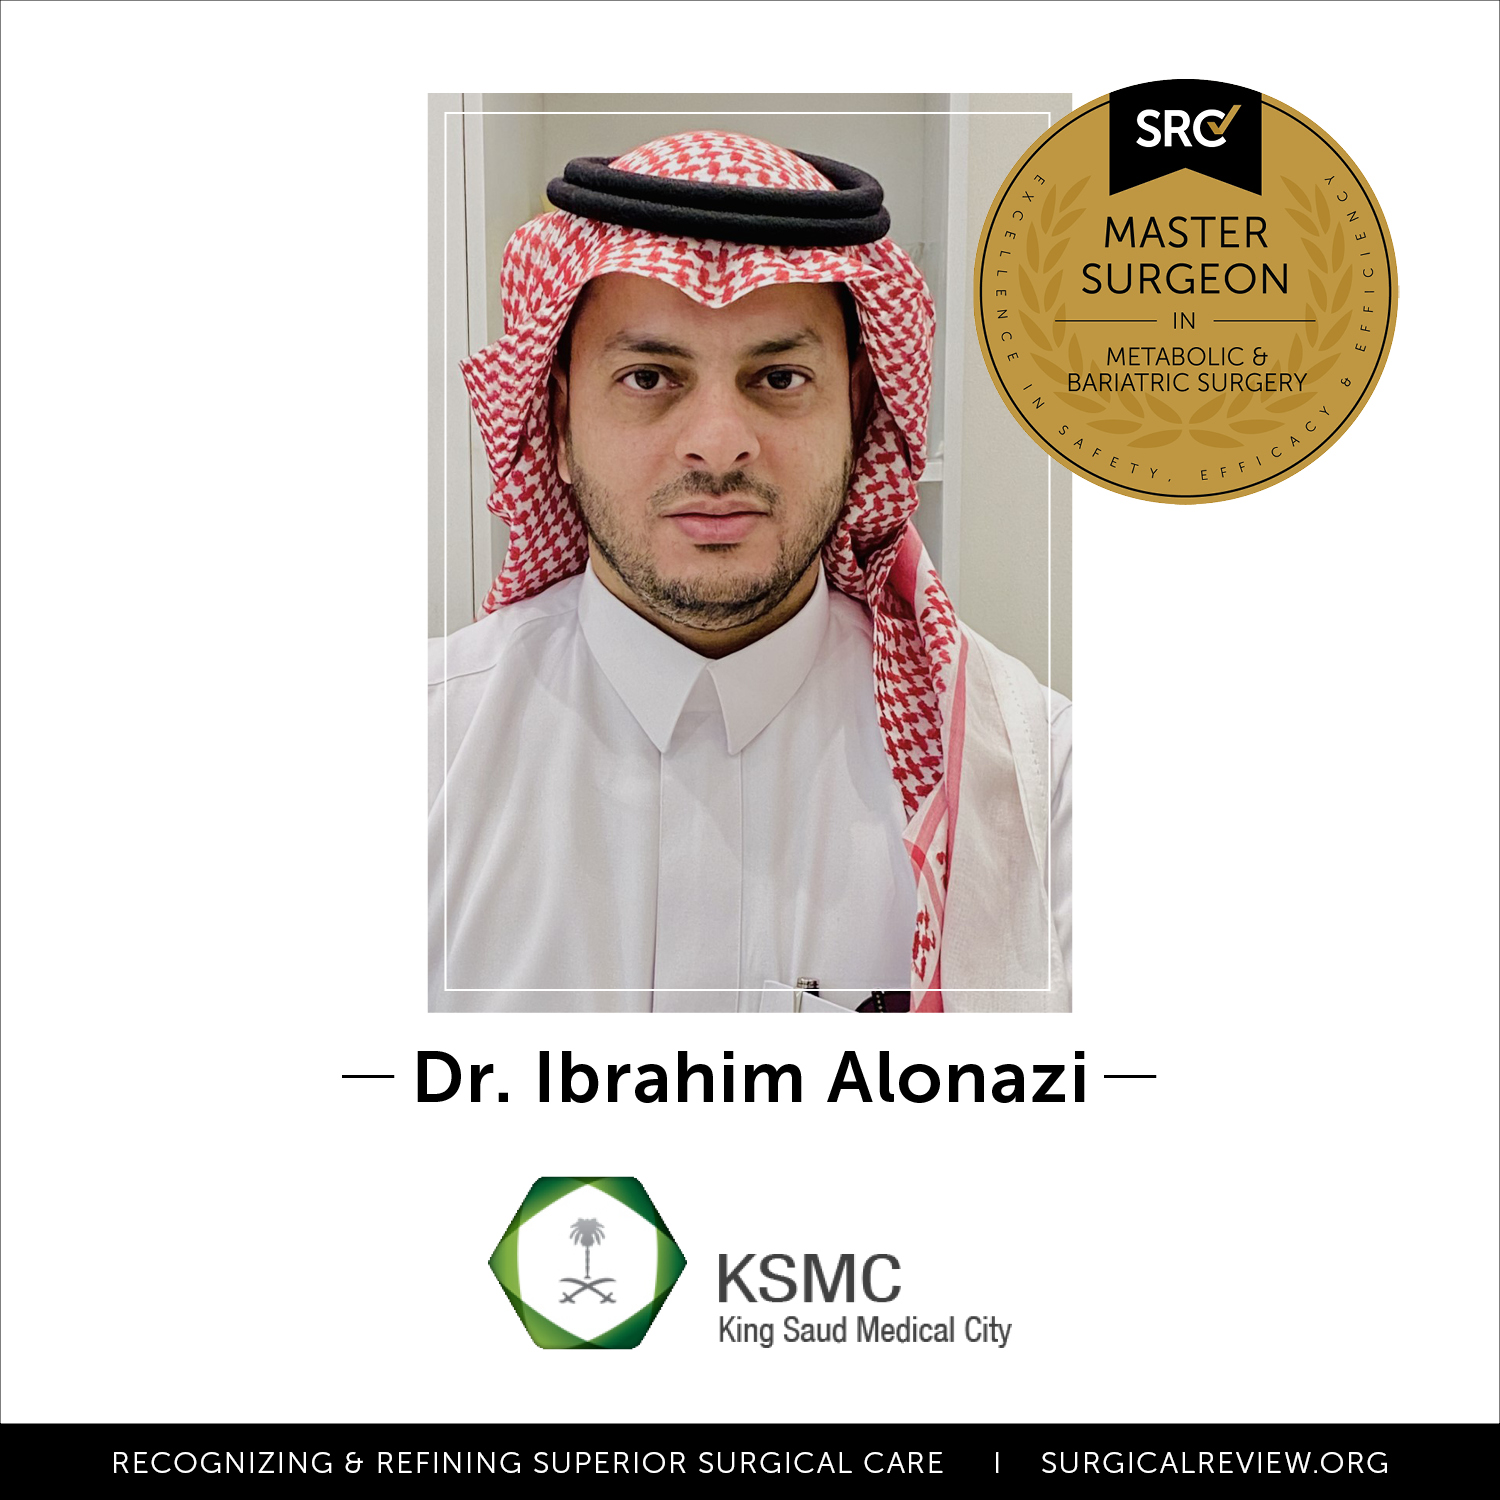 Dr. Ibrahim Alonazi